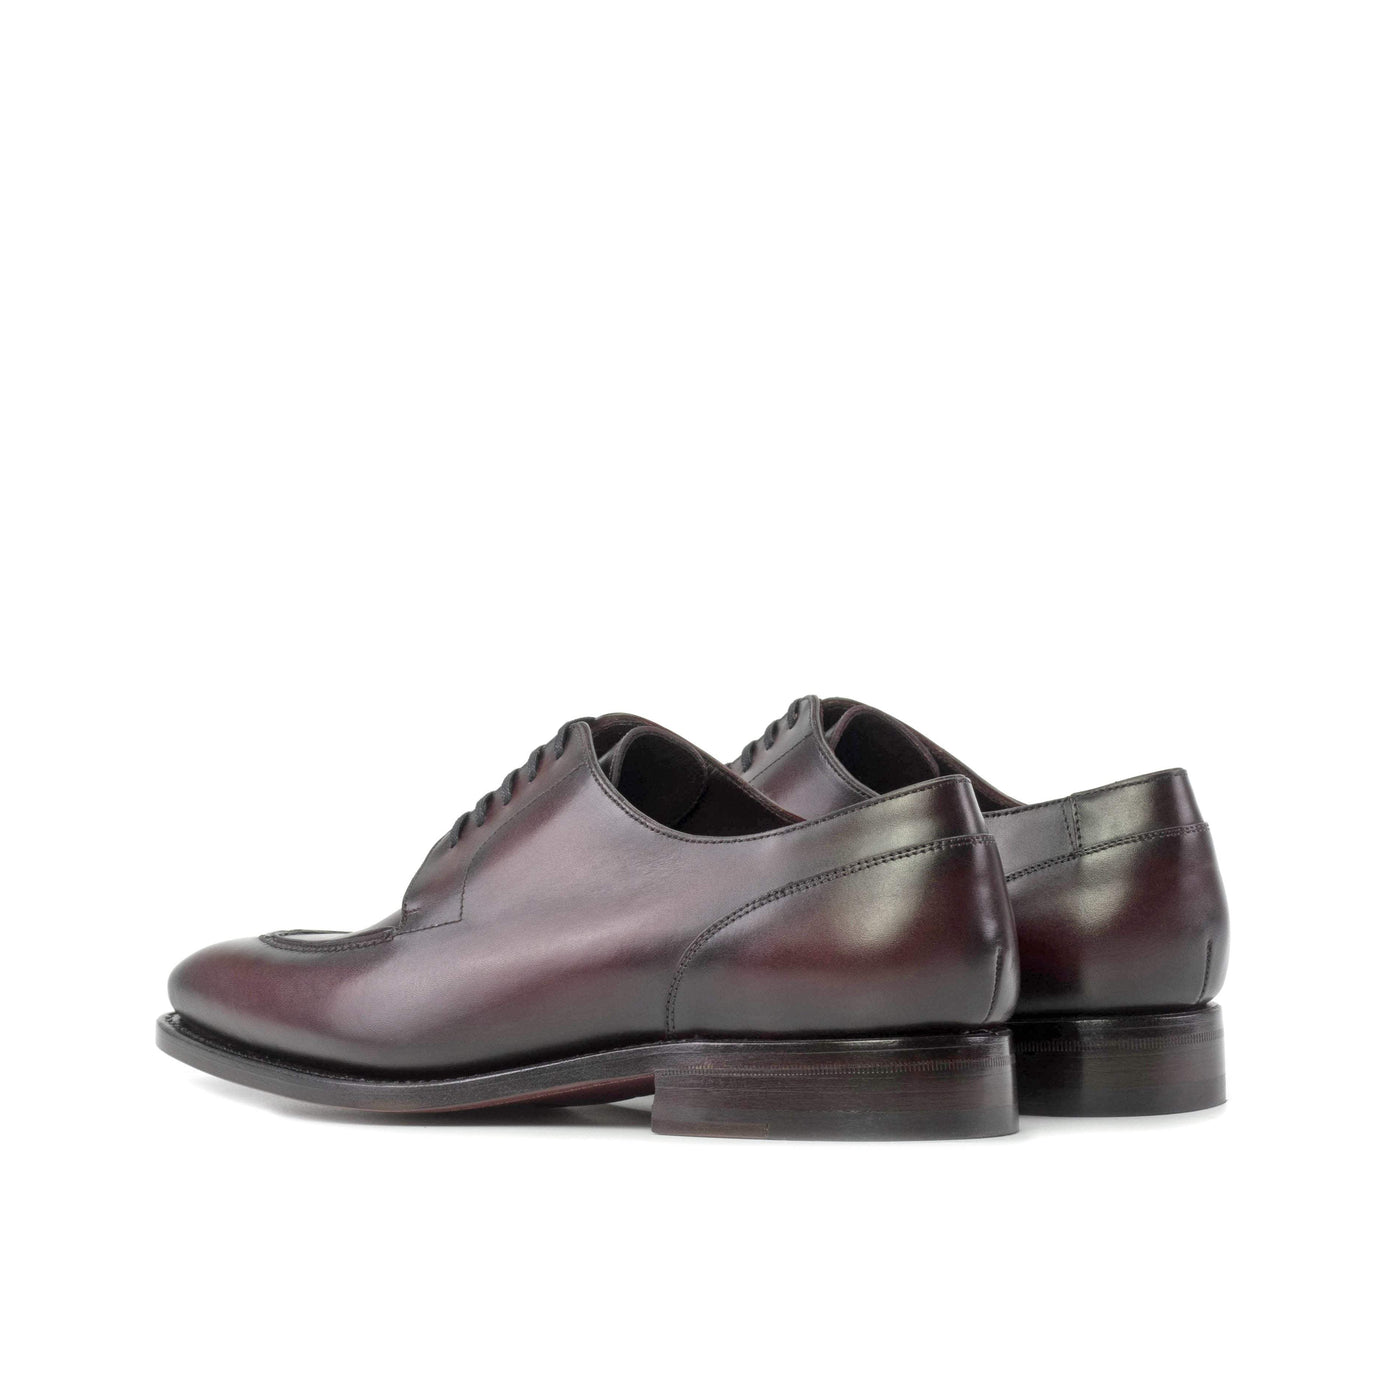 Men's Derby Split Toe Shoes Leather Goodyear Welt Burgundy 5543 4- MERRIMIUM